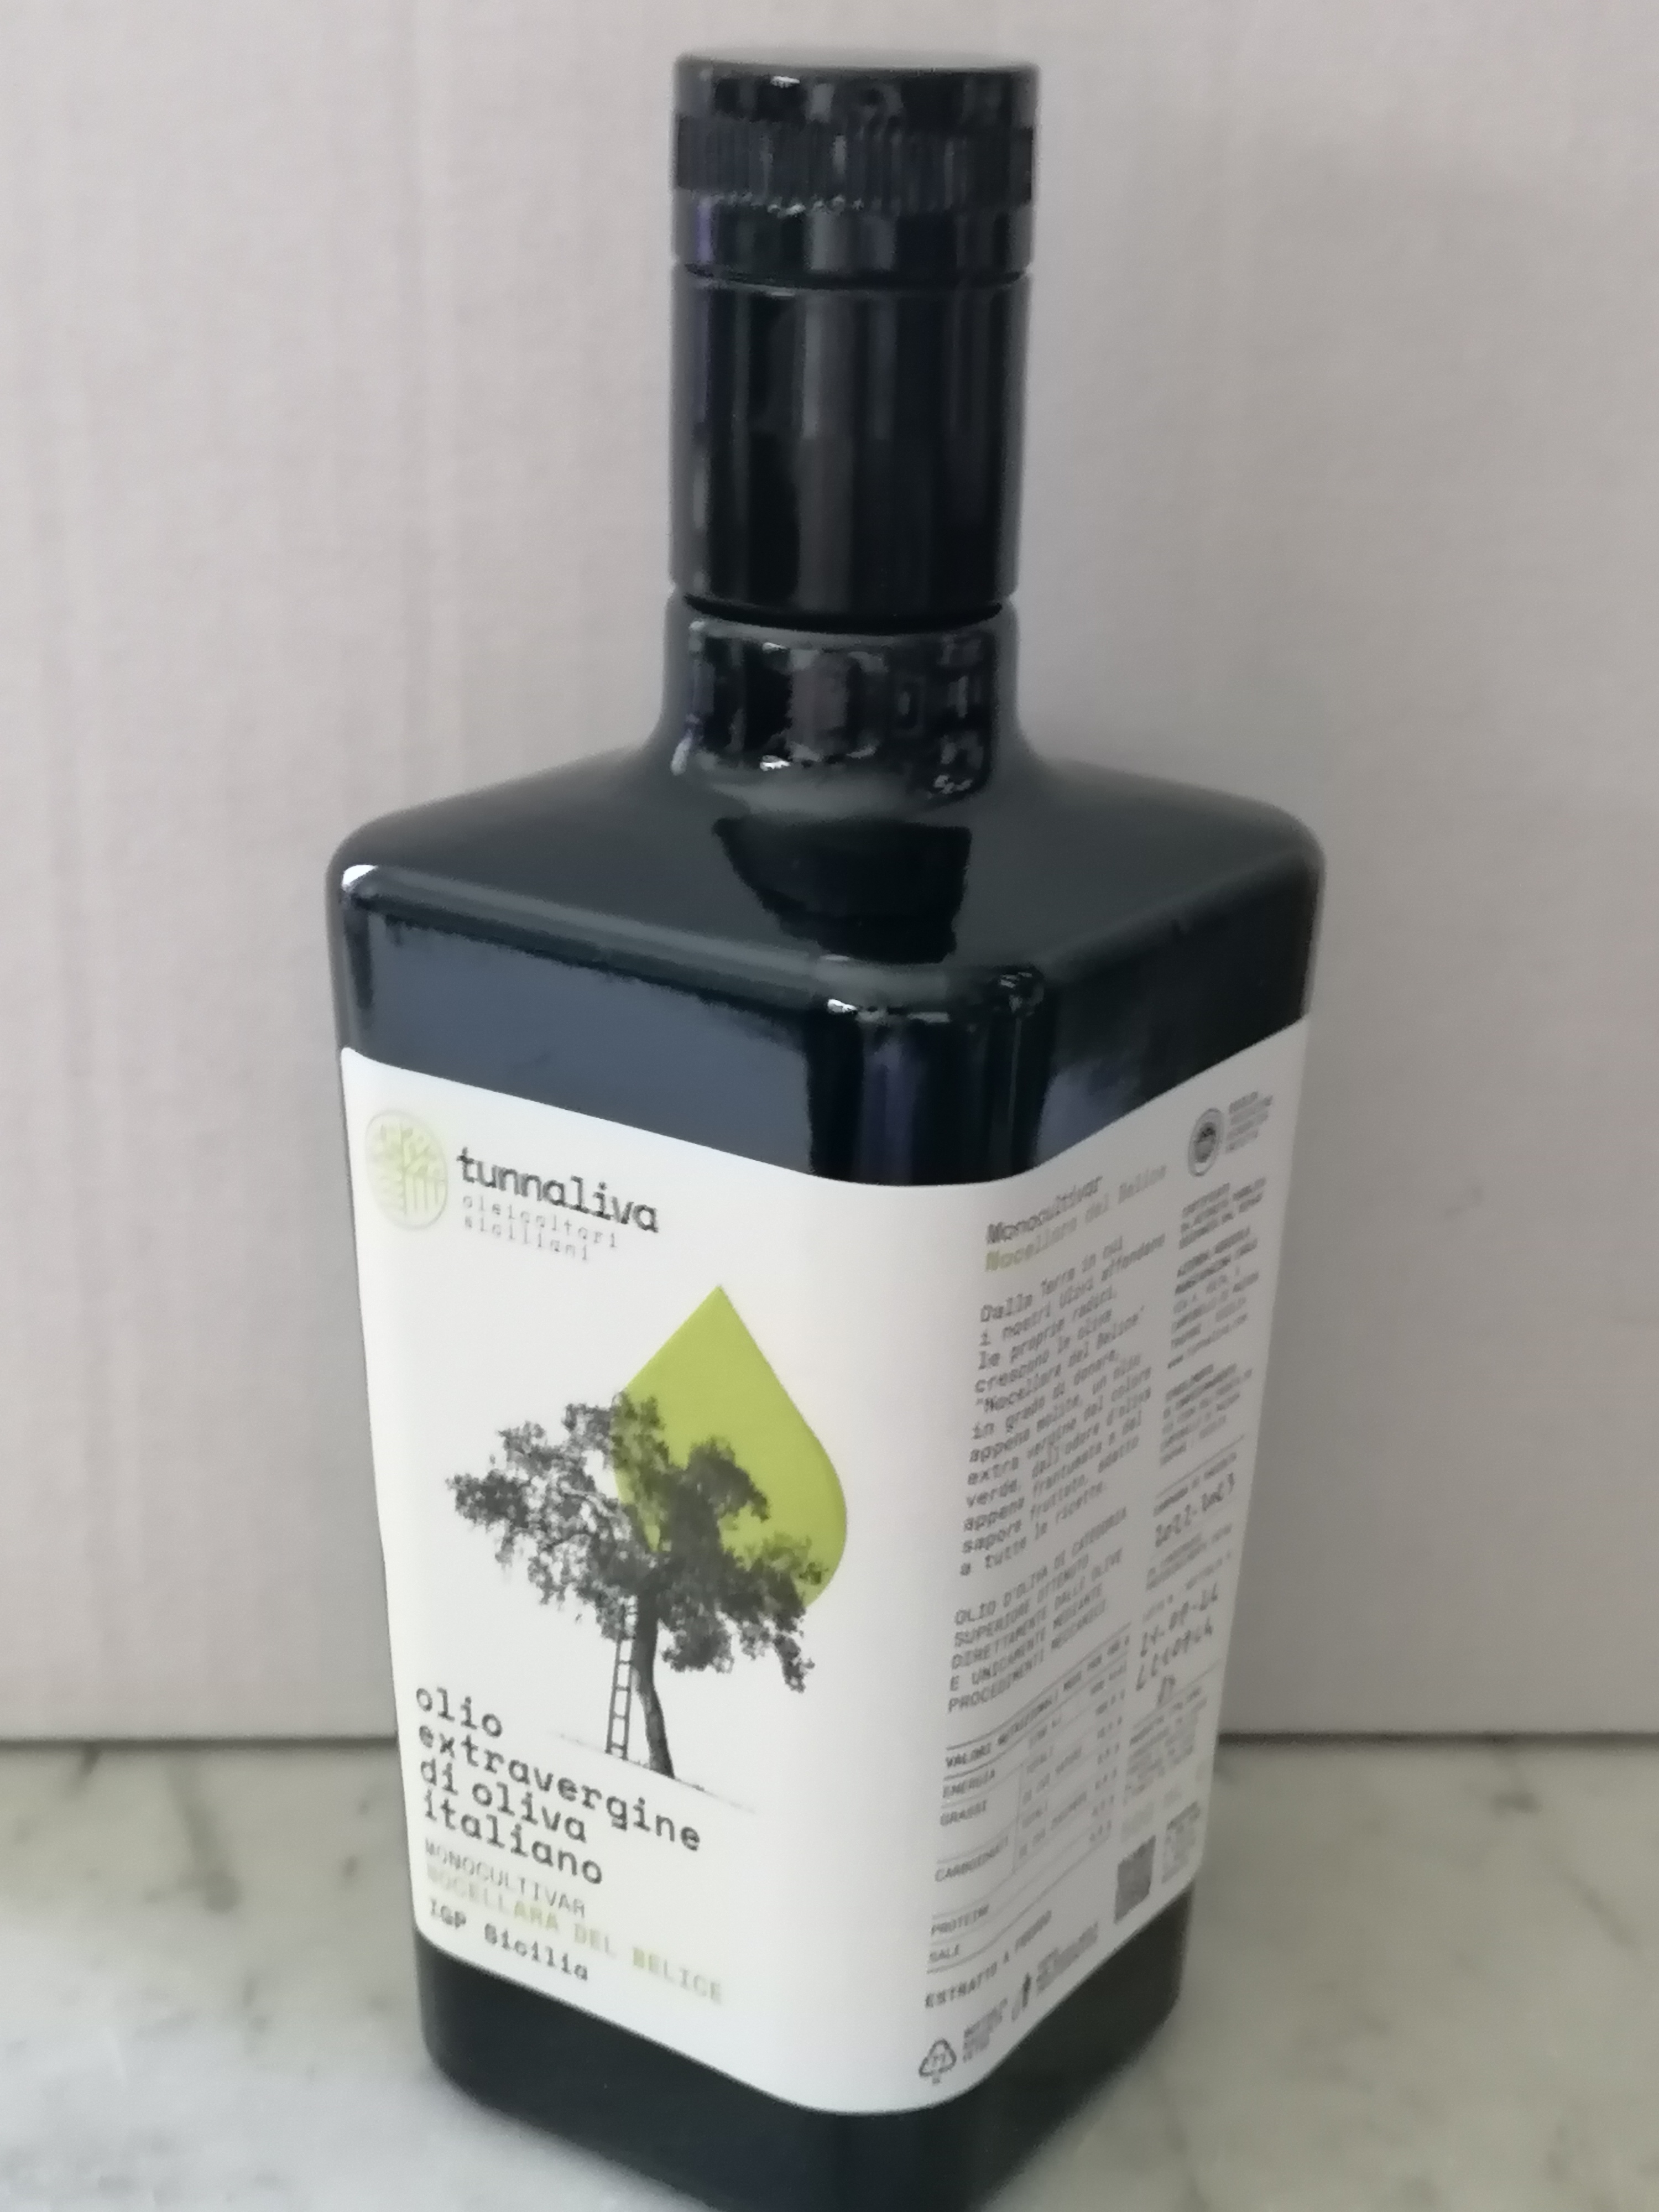 tunnaliva olio extravergine die olivia italiano-sicilia 500ml Flasche